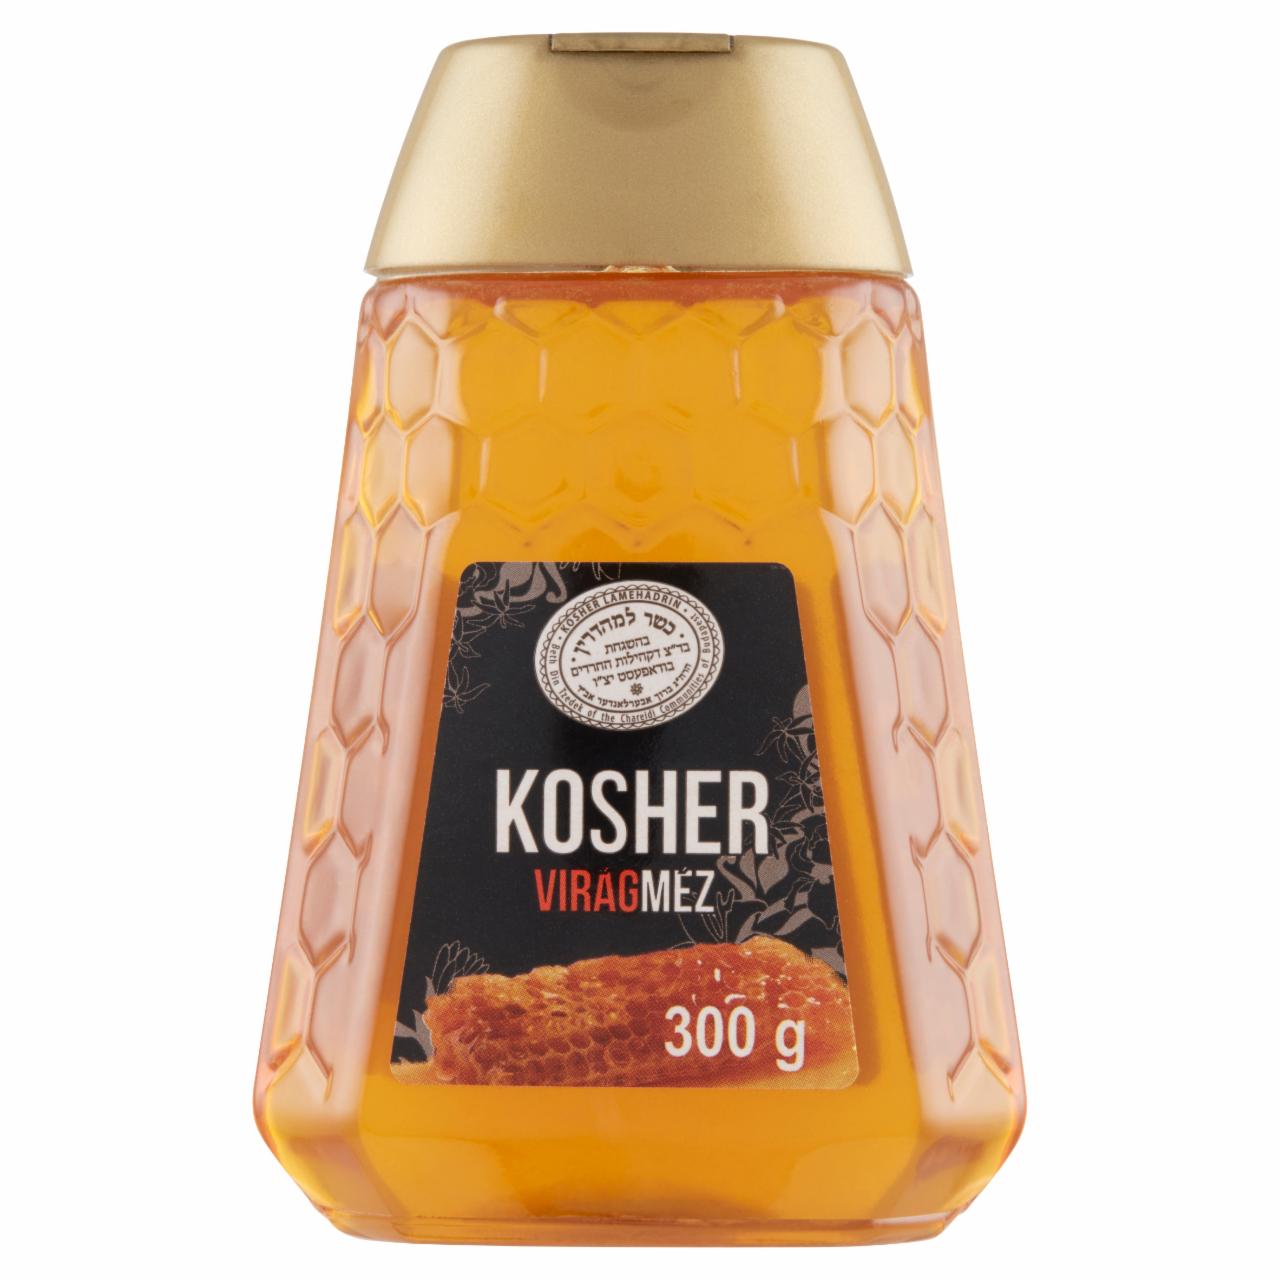 Képek - Kosher szelepes virágméz 300 g